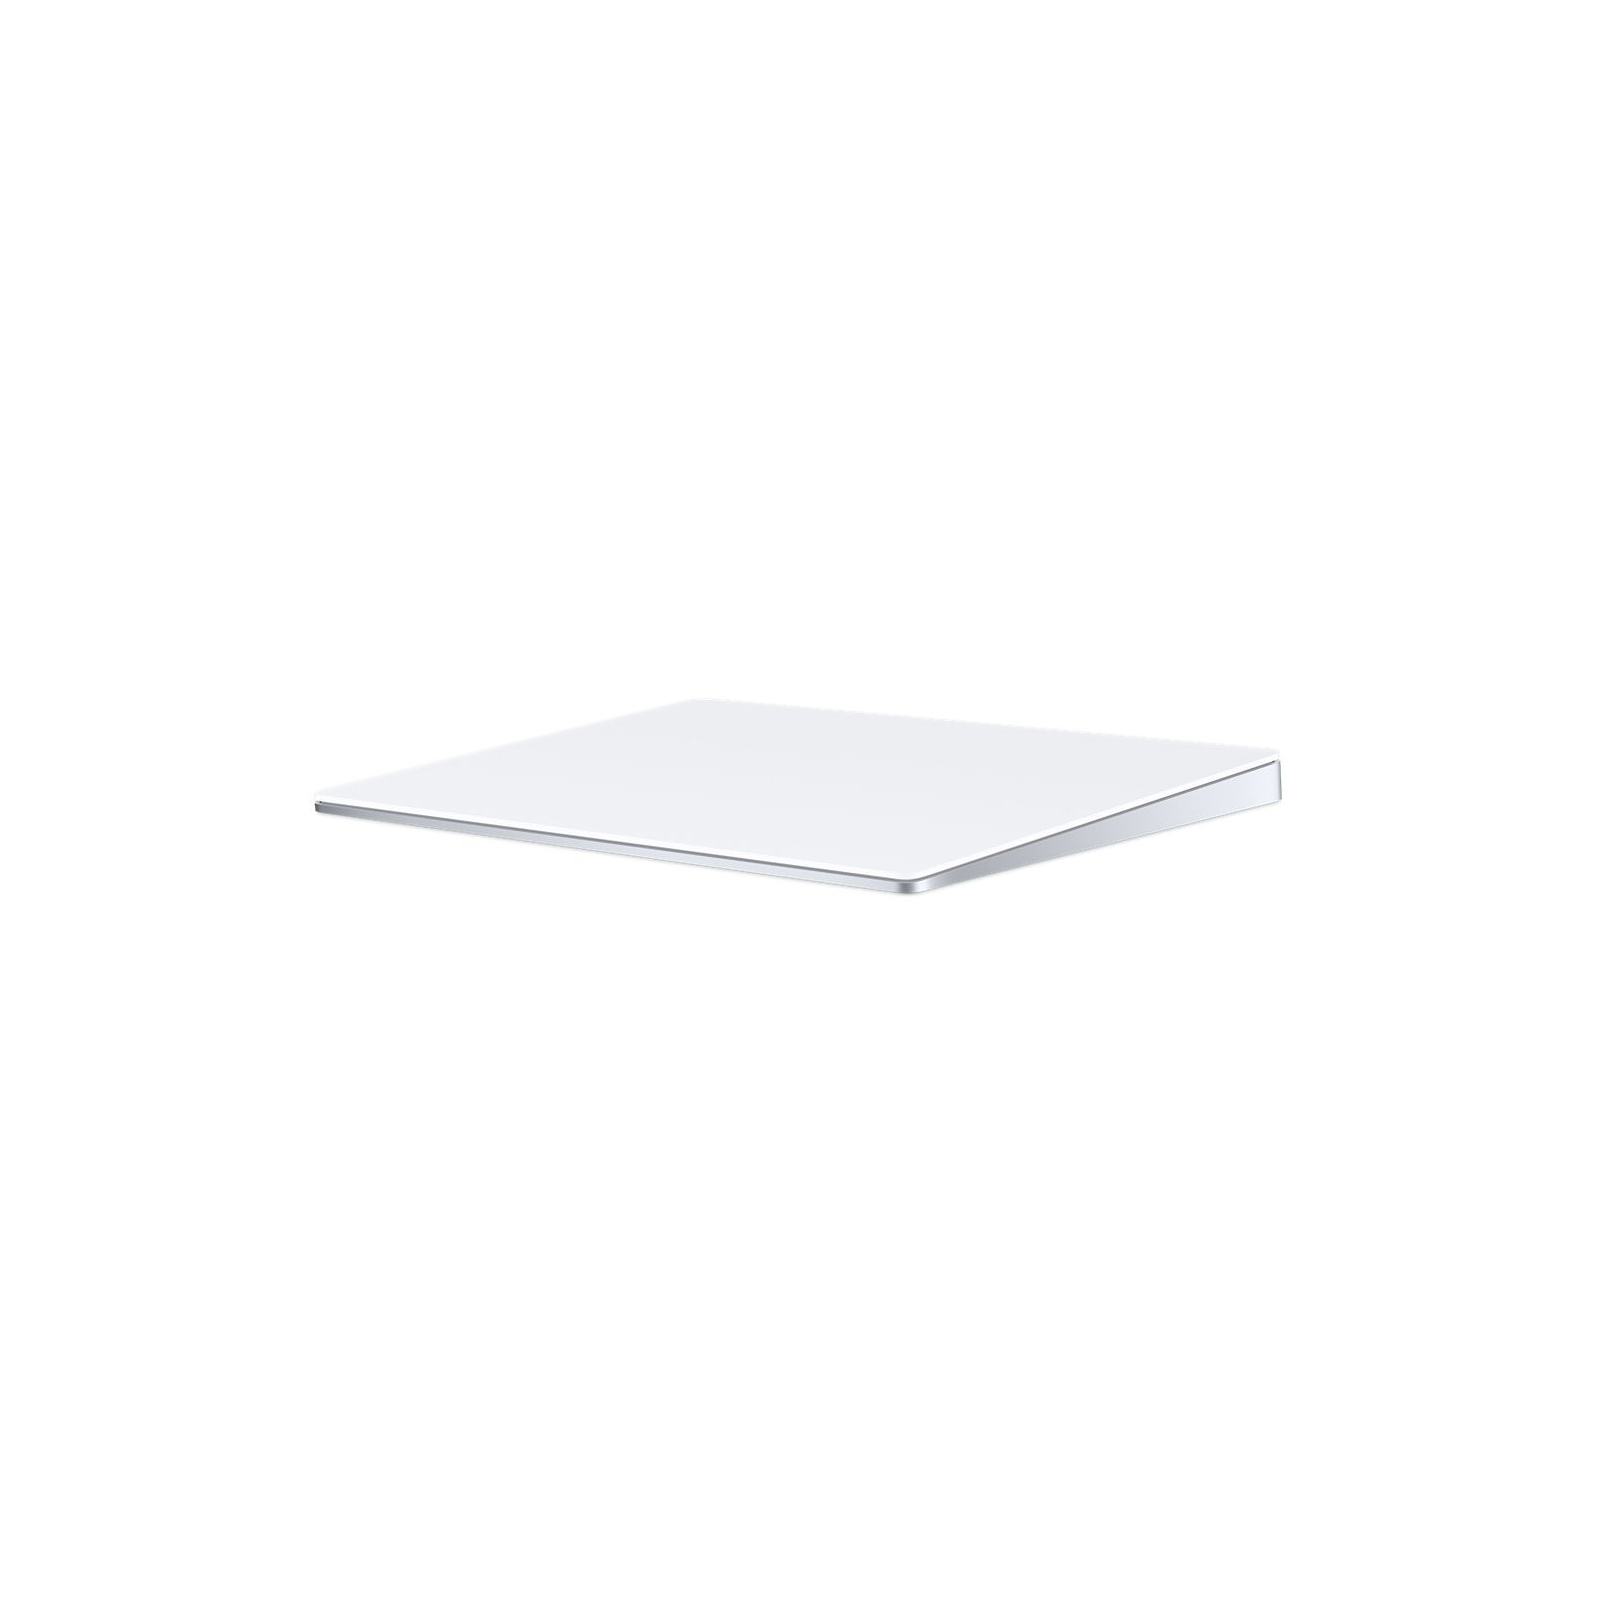 Трекпад Apple Magic Trackpad 2 white (MJ2R2Z/A)